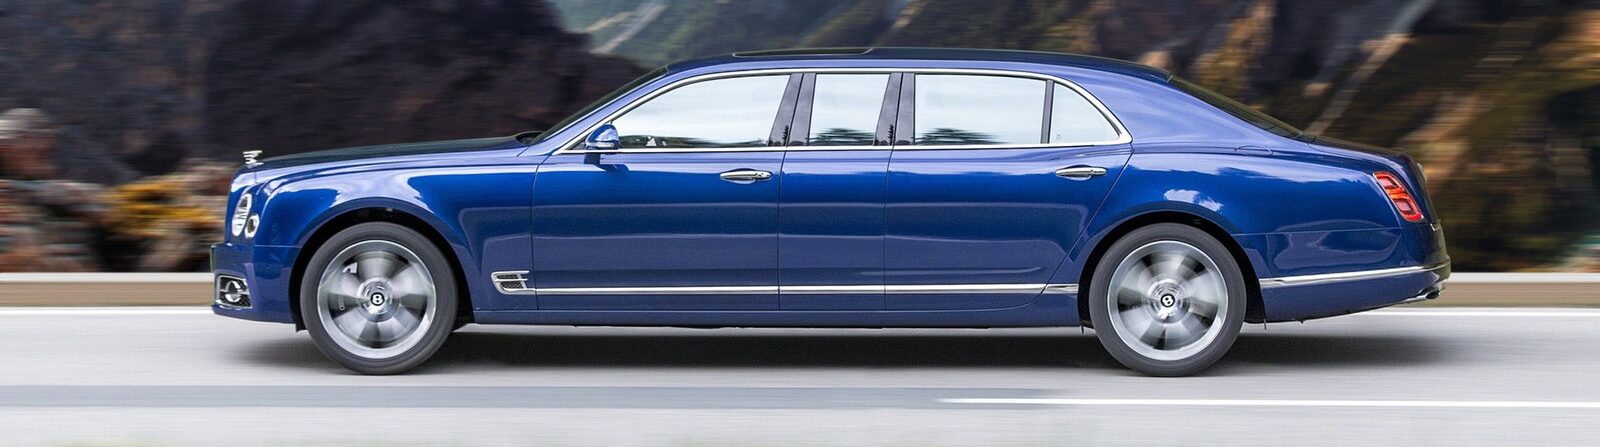 Bentley Mulsanne Limo настоящий соперник Rolls-Royce Phantom